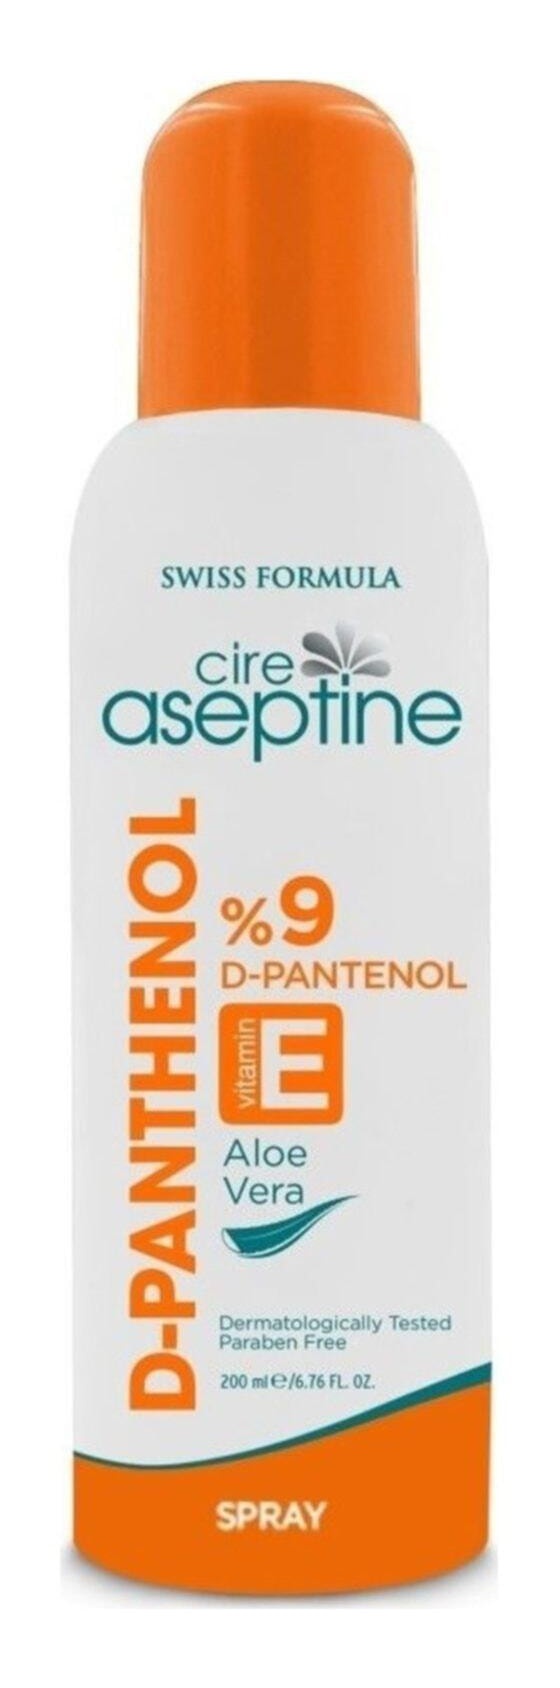 Cire Aseptine D-panthenol